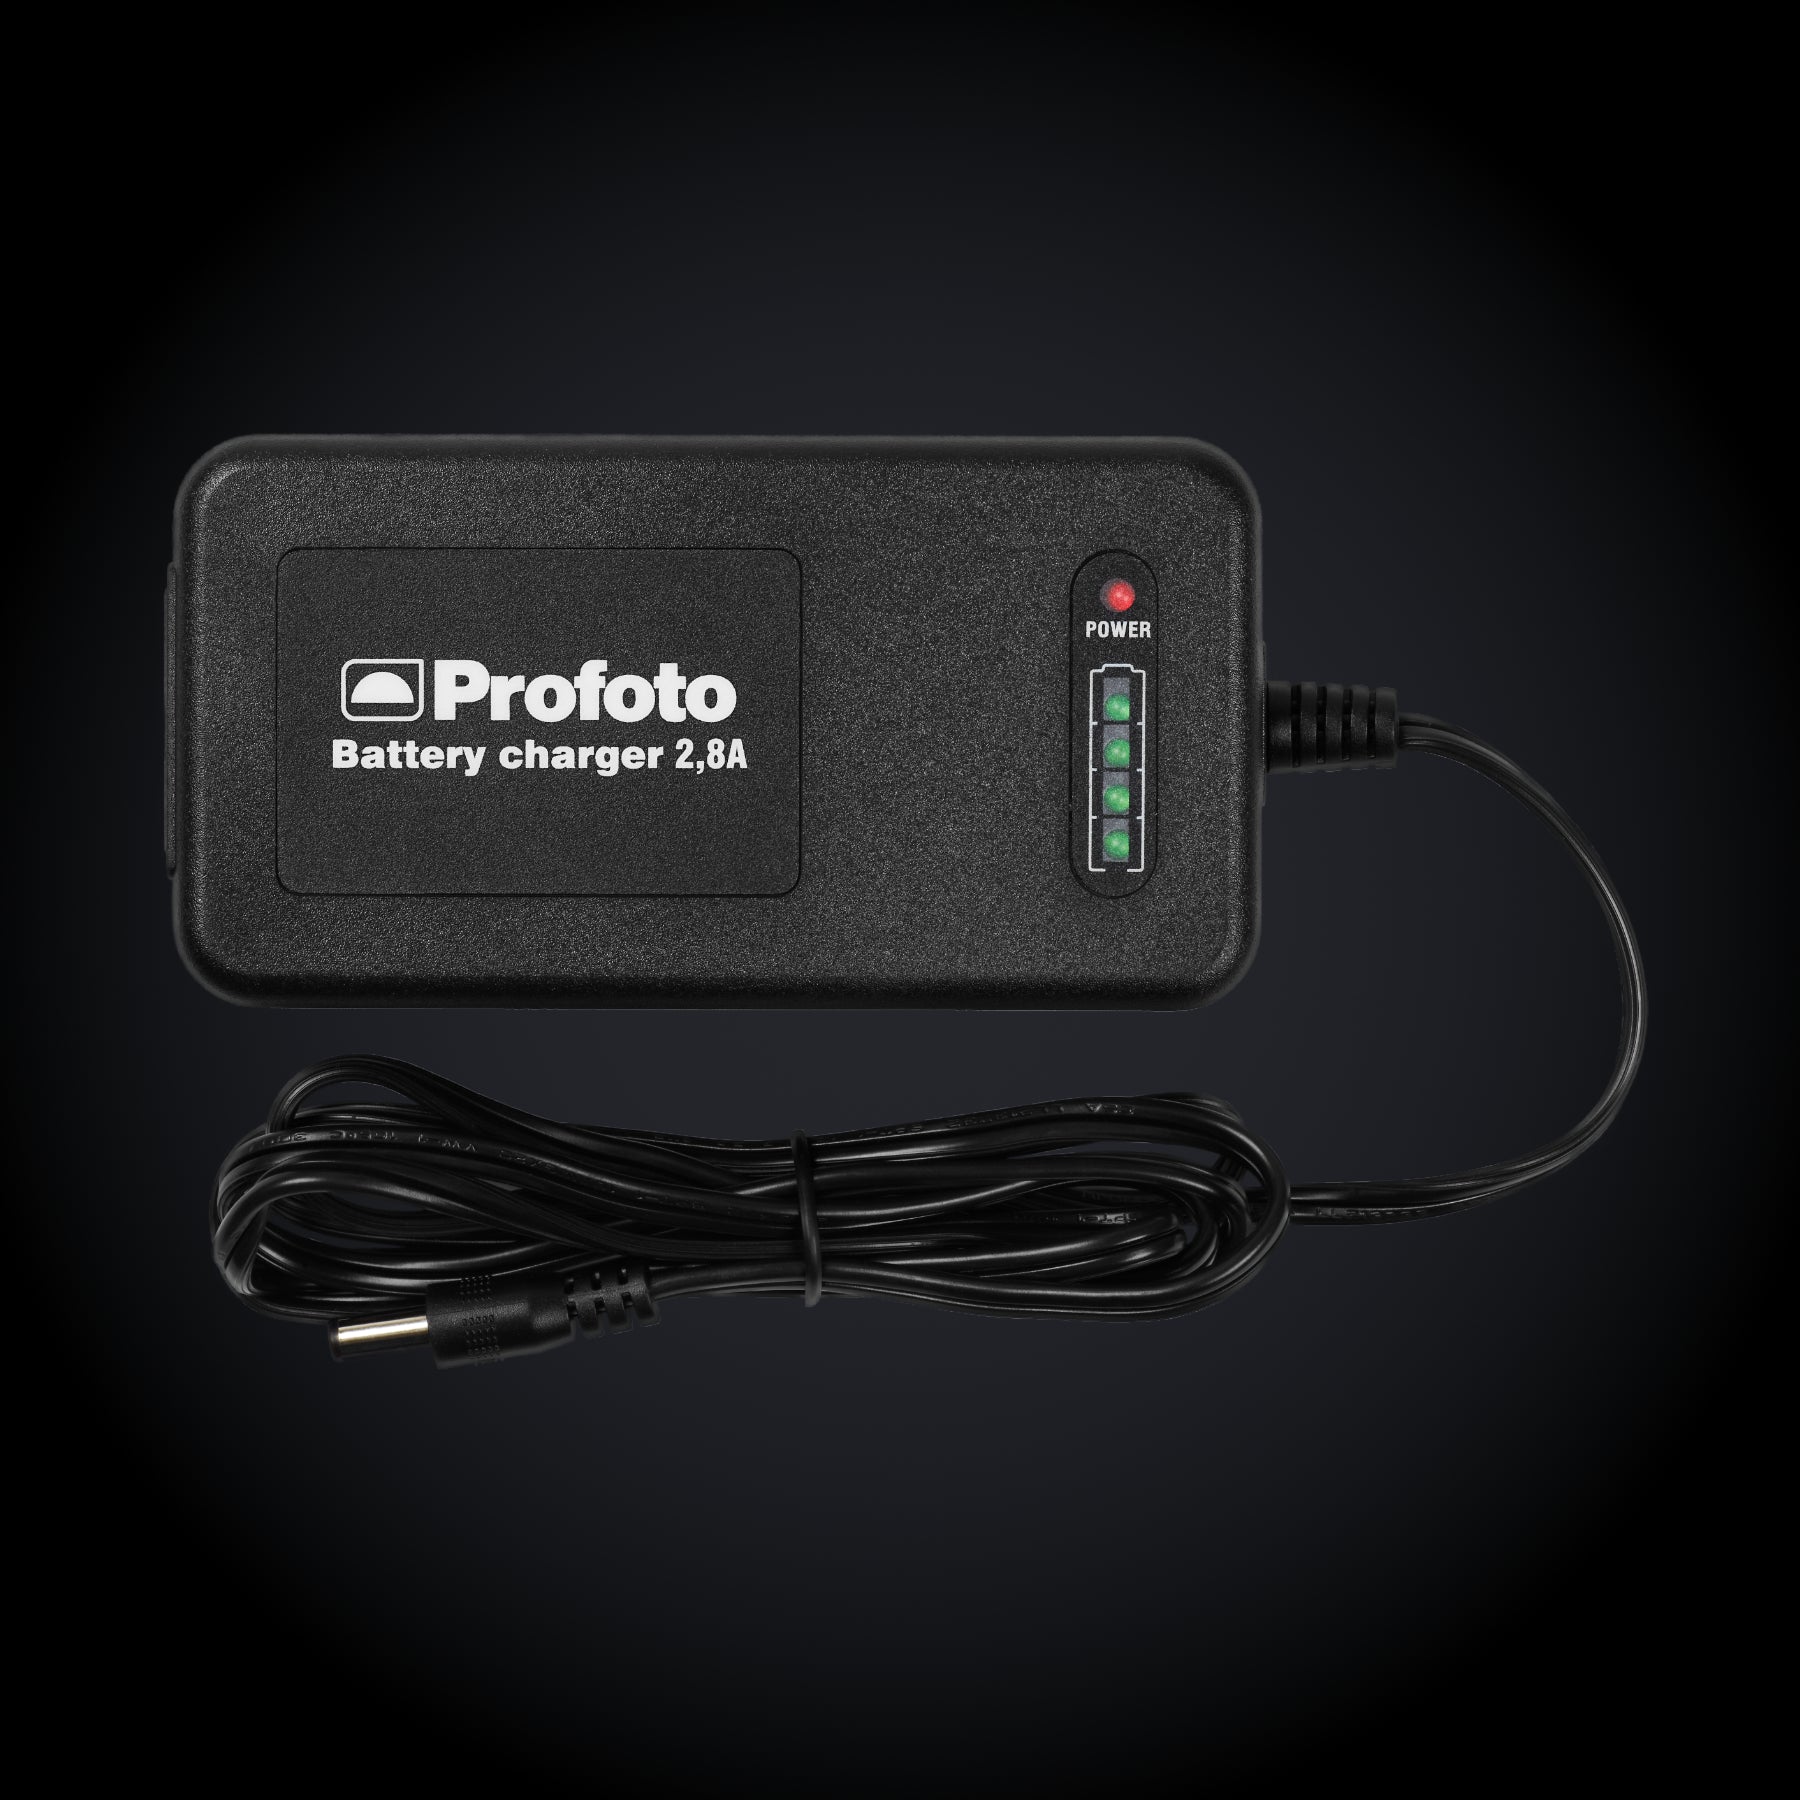 Buy Profoto battery charger | Profoto NZ | Topic 